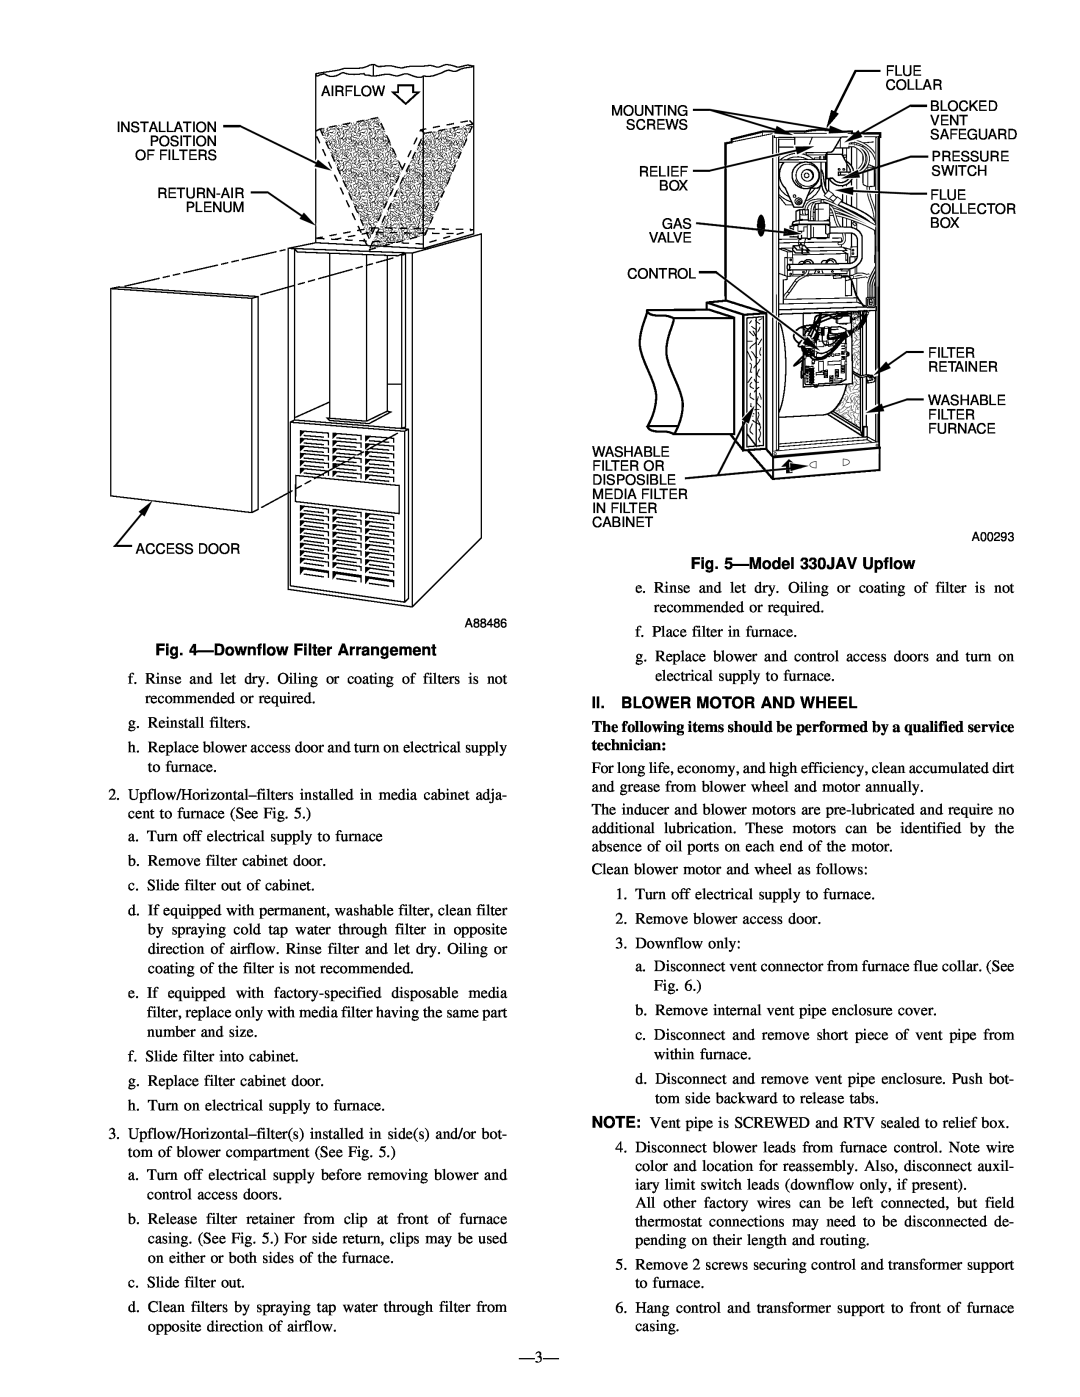 Bryant 331JAV instruction manual DownflowFilter Arrangement, Model330JAV Upflow, Ii. Blower Motor And Wheel 